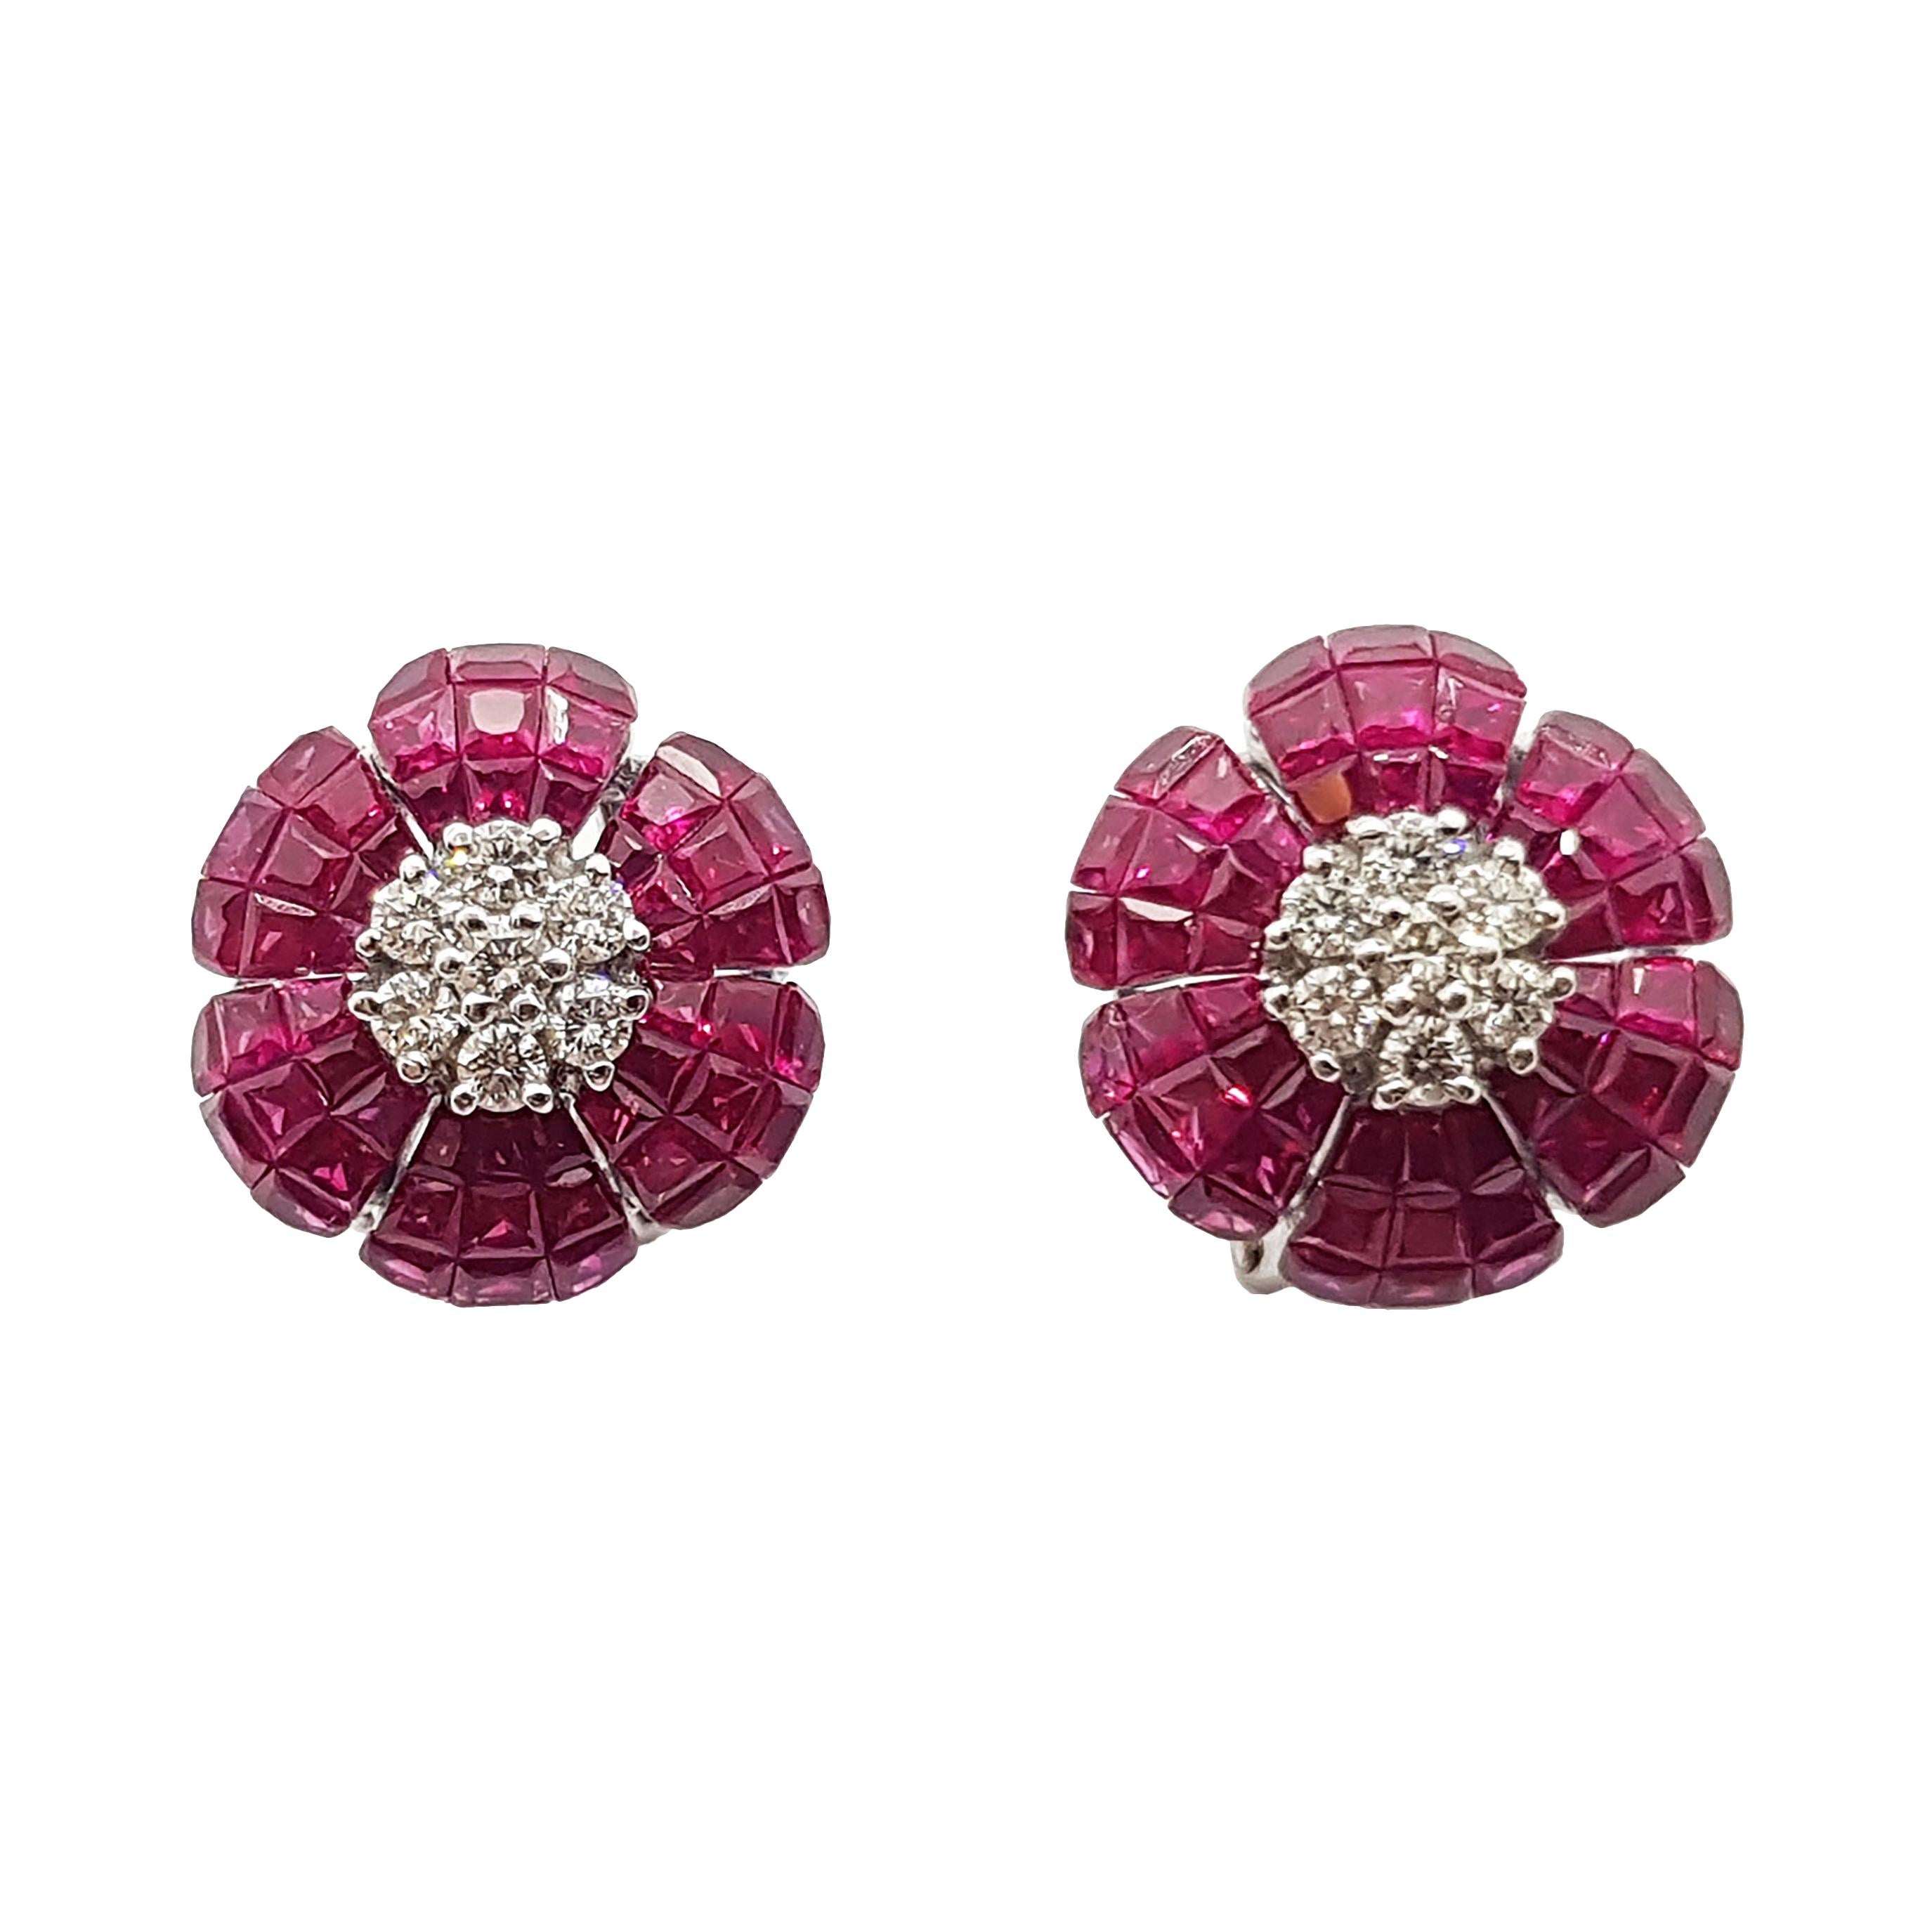 Ruby with Diamond Flower Earrings Set in 18 Karat White Gold Settings